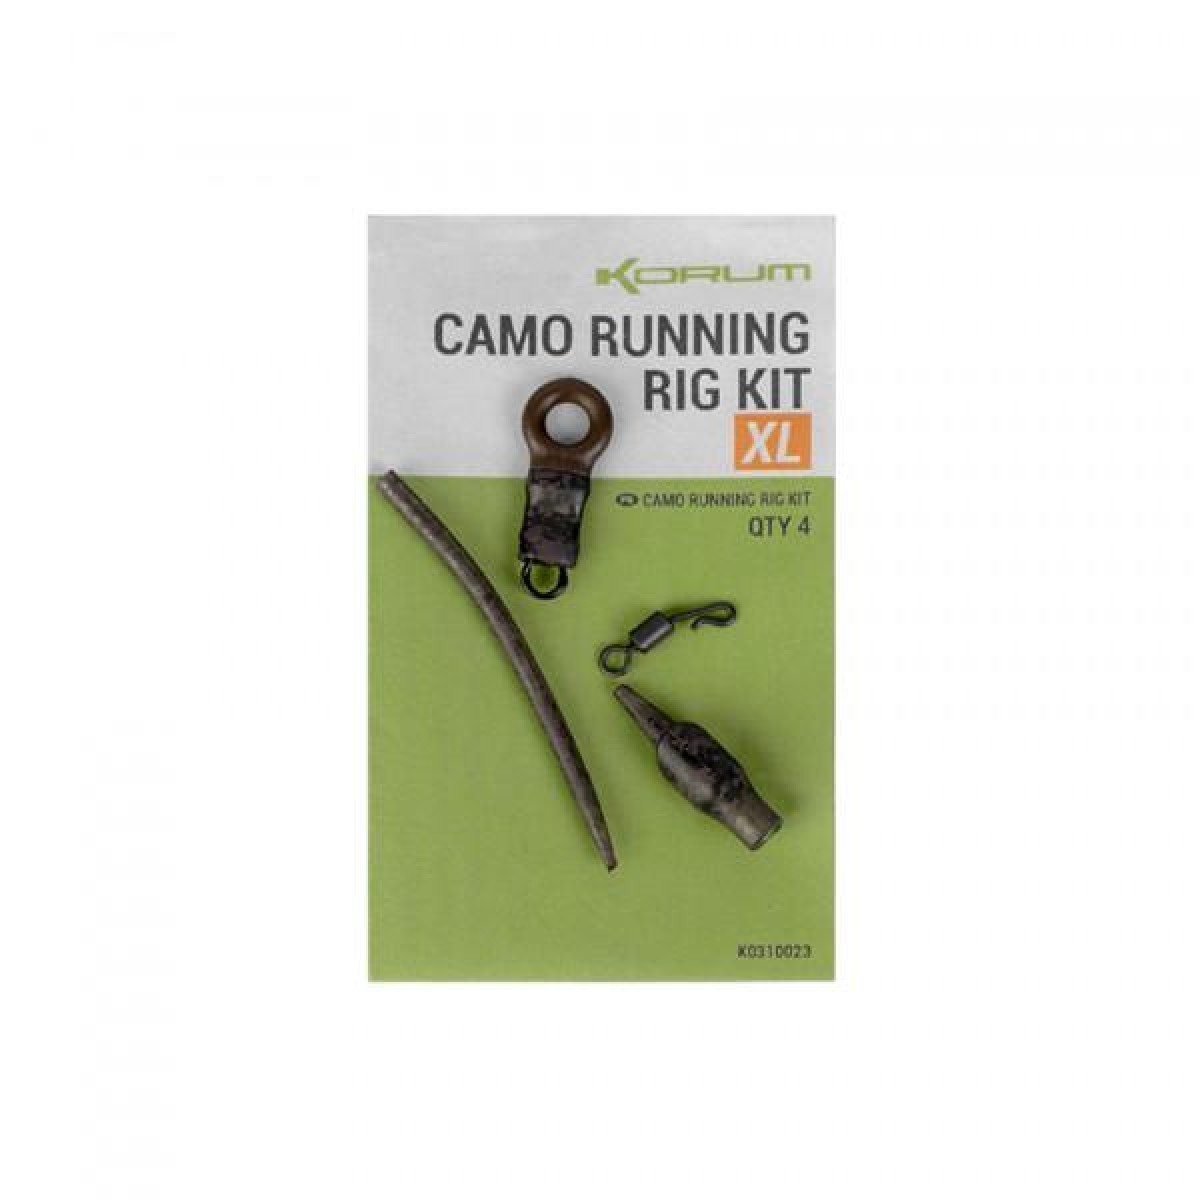 Korum Camo Running Rig Kit 4st. X-Large